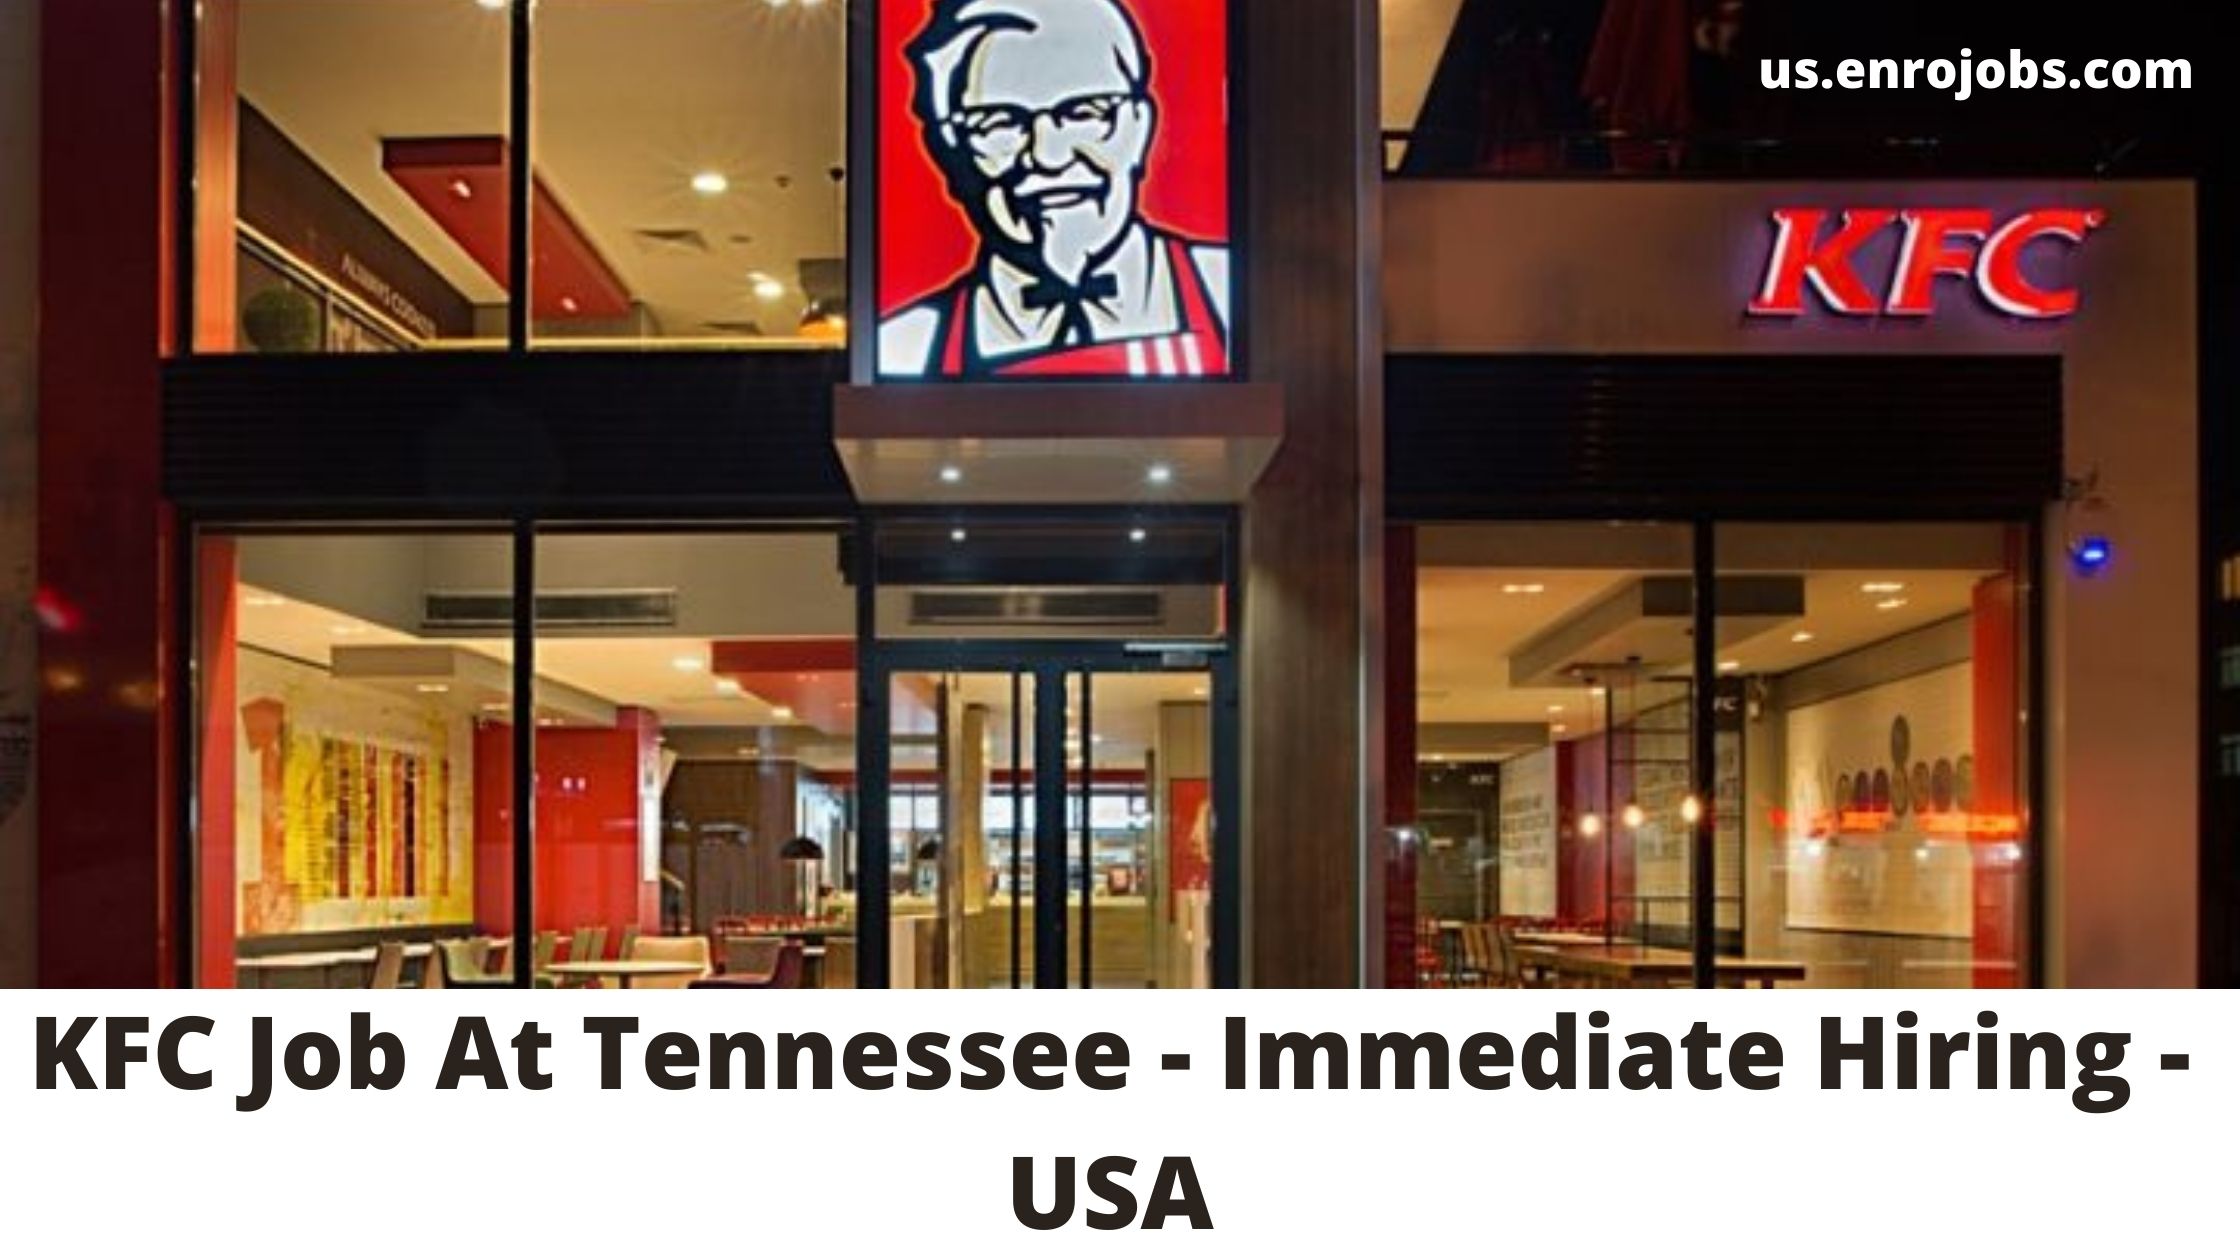 KFC Job At Tennessee - - USA